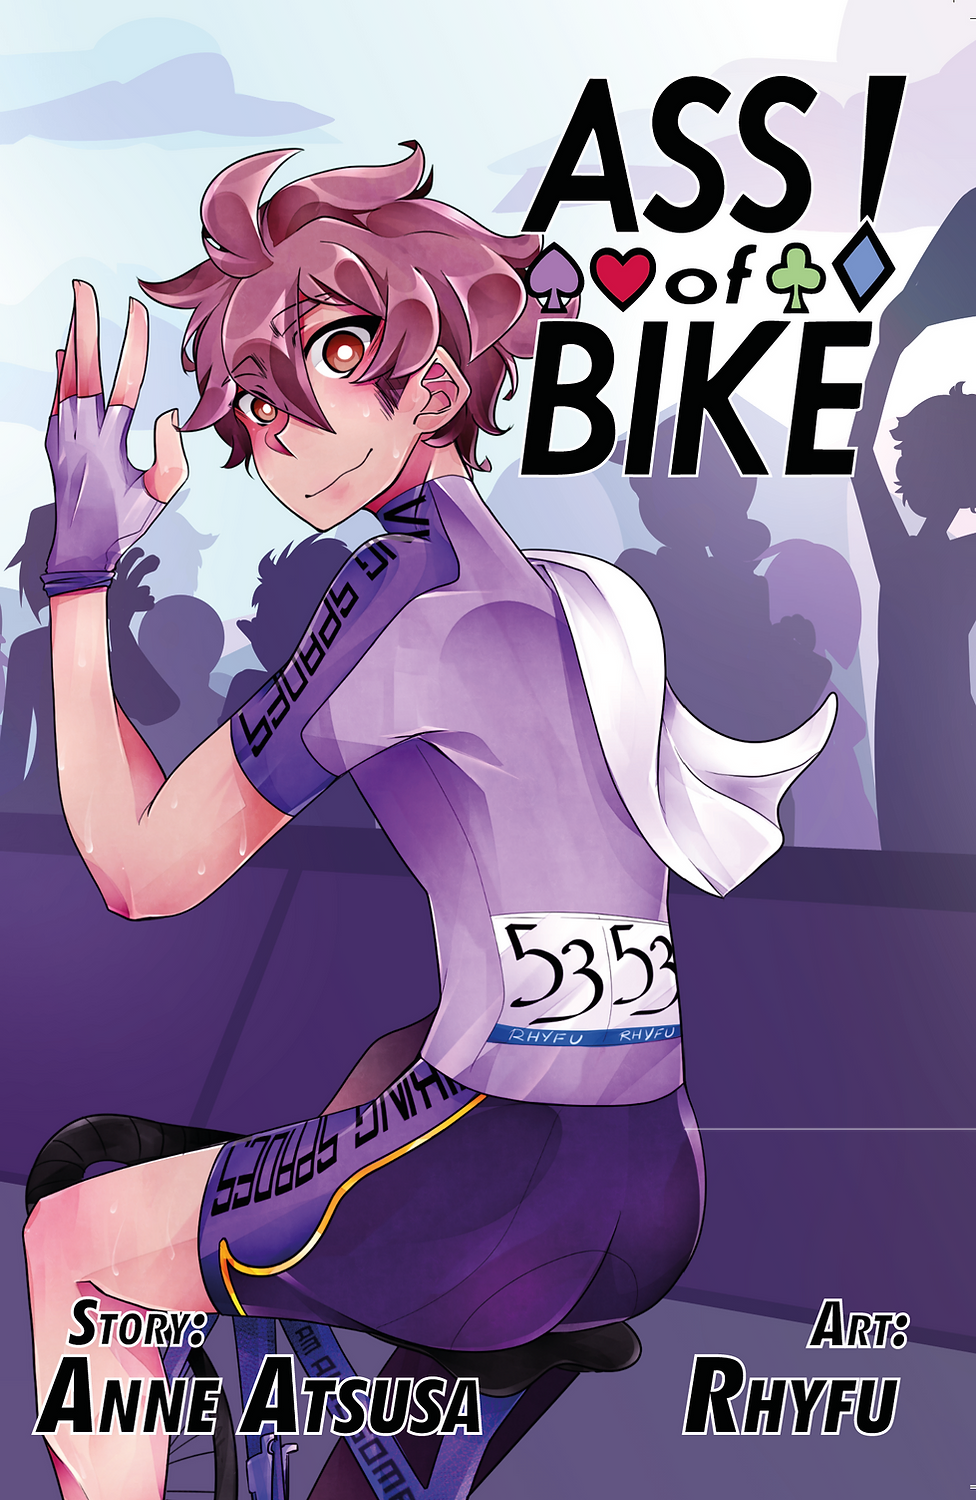 Cover des Mangas Ass of Bike Band 1 von Anne Atsusa